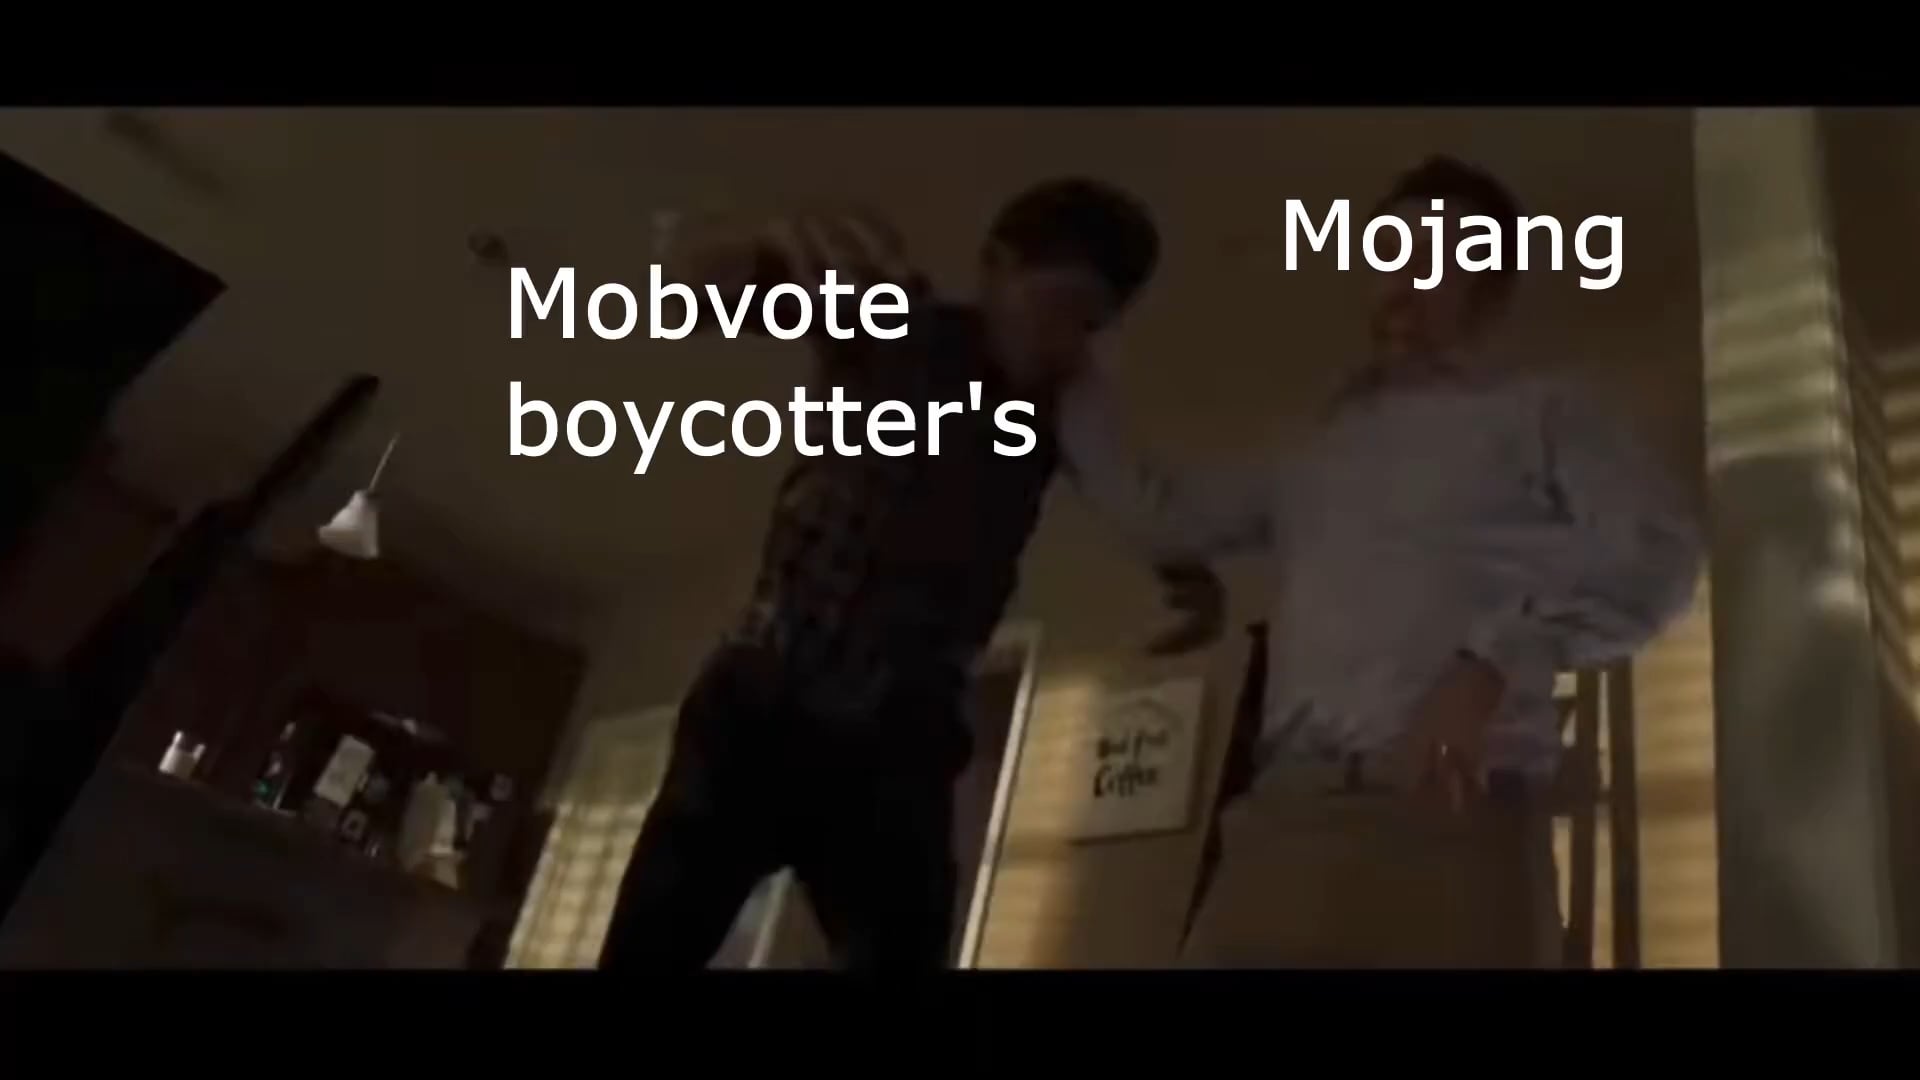 Minecraft Memes - "Mobvote Haters Beware!"